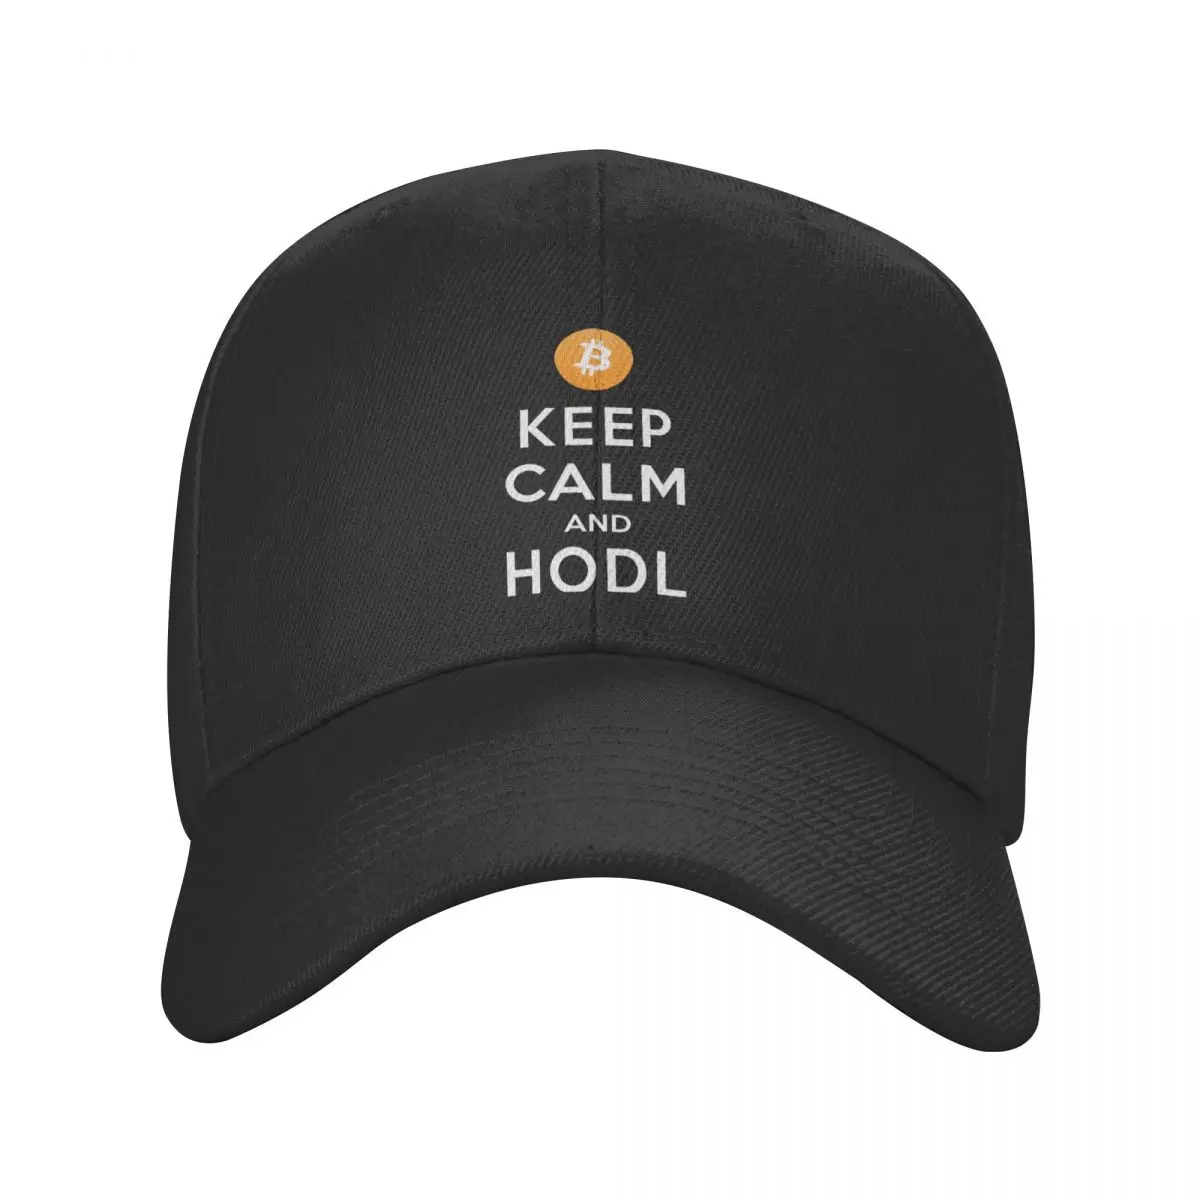 

New Bitcoin Cryptocurrency Crypto Btc Baseball Cap Adjustable Keep Calm HODL Dad Hat Permance Snapback Hats Trucker Caps